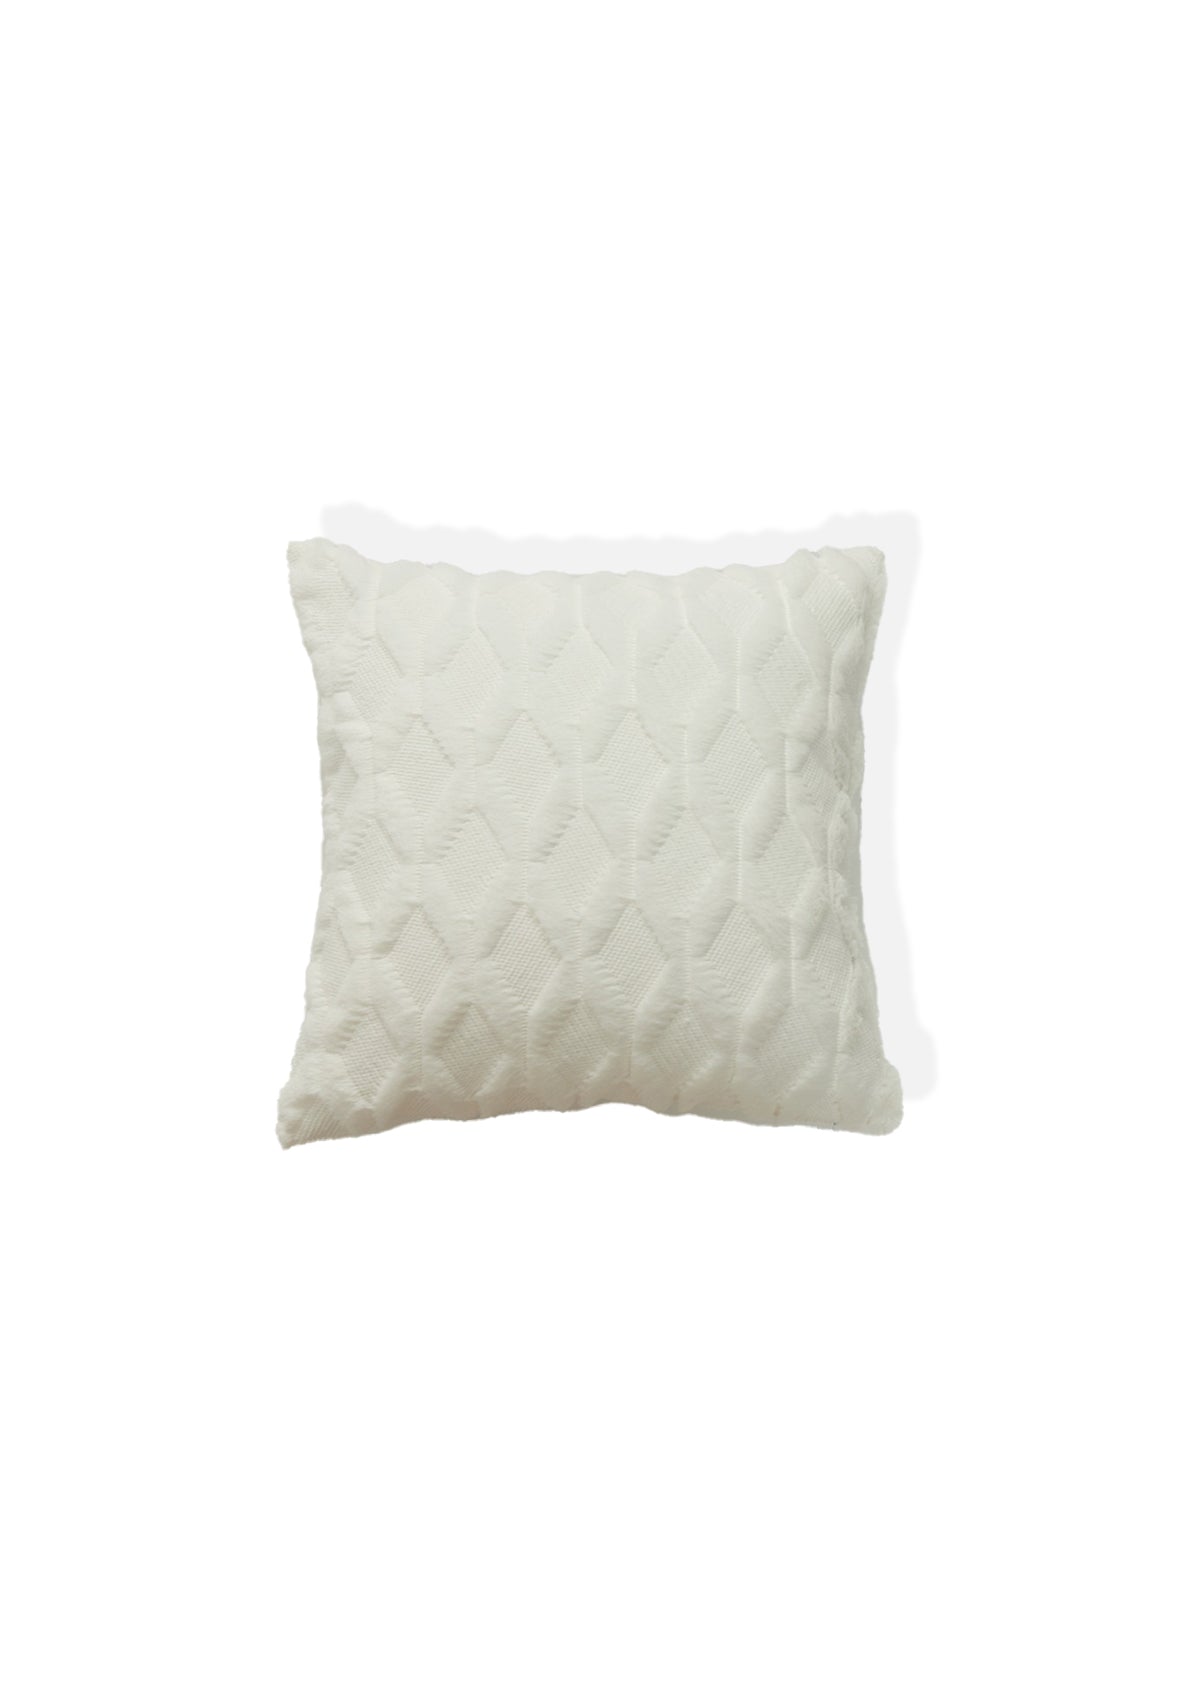 Pristine White Fluffy Cushion Covers | CovermyCushion